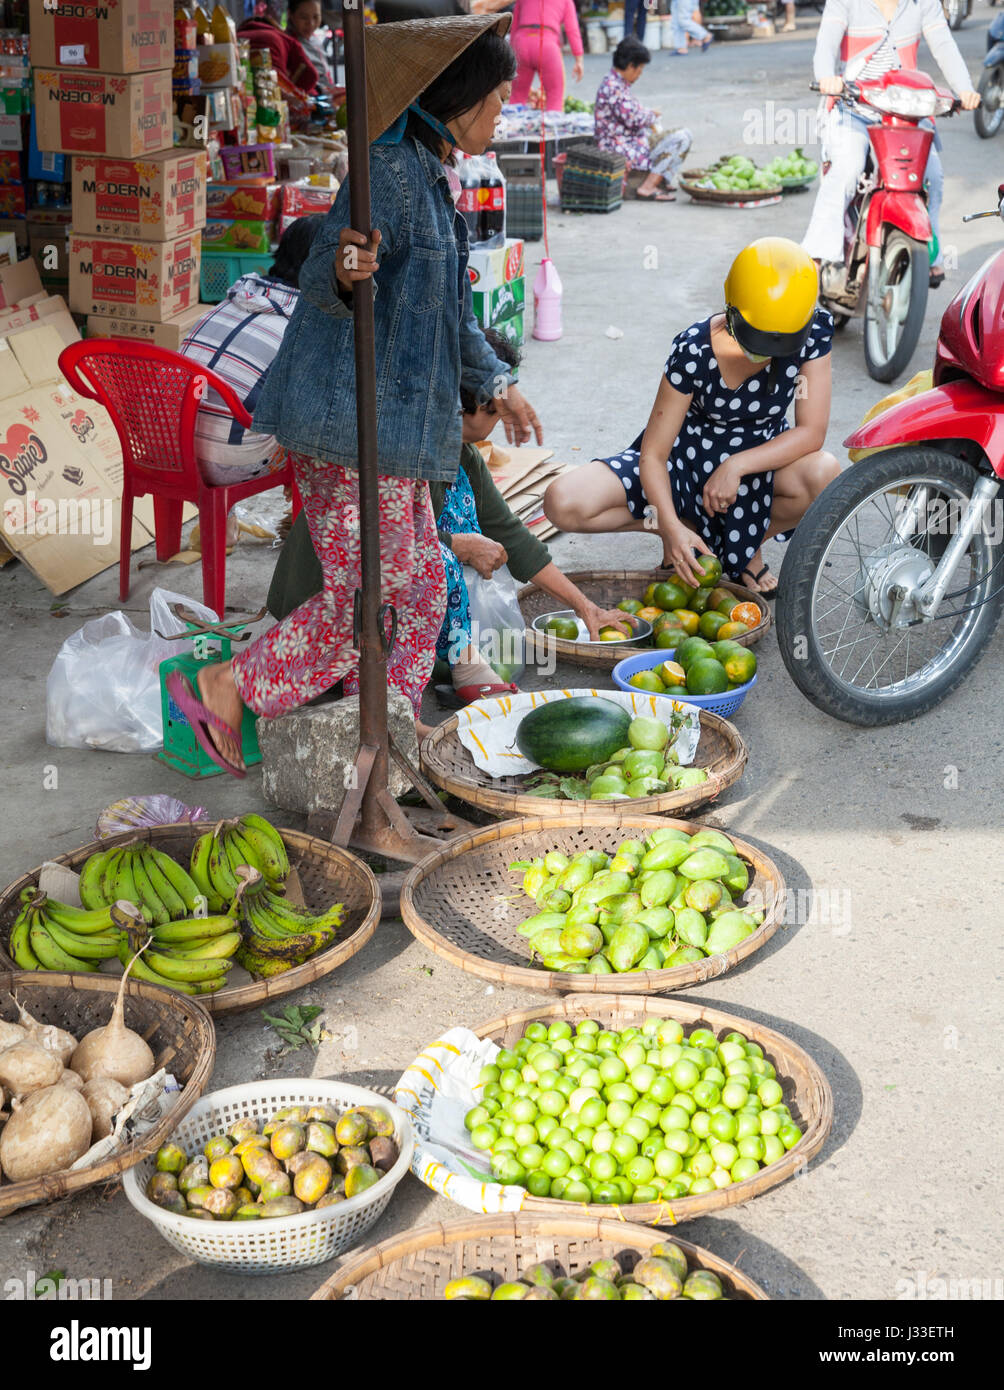 NHA TRANG, VIETNAM - Dezember 18: Frau nimmt Orangen auf dem nassen Markt am 18. Dezember 2015 in Nha Trang, Vietnam. Stockfoto